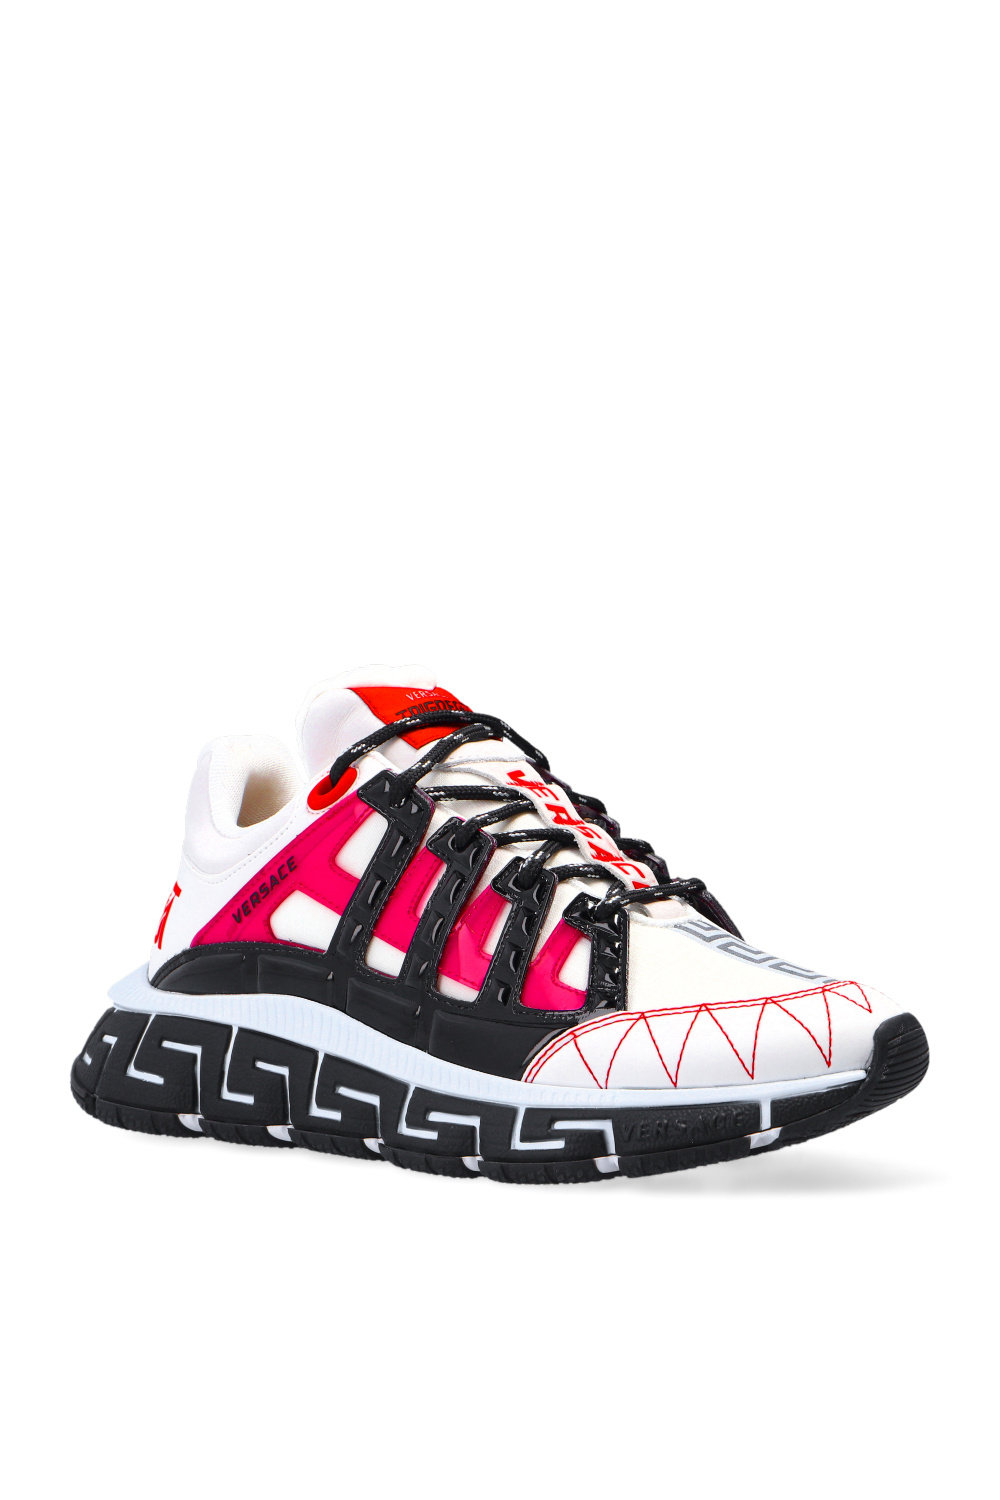 IetpShops GB - 'Trigreca' sneakers Versace - Adidas Falcon Elite 3 Marathon  Running Shoes Sneakers CP9642